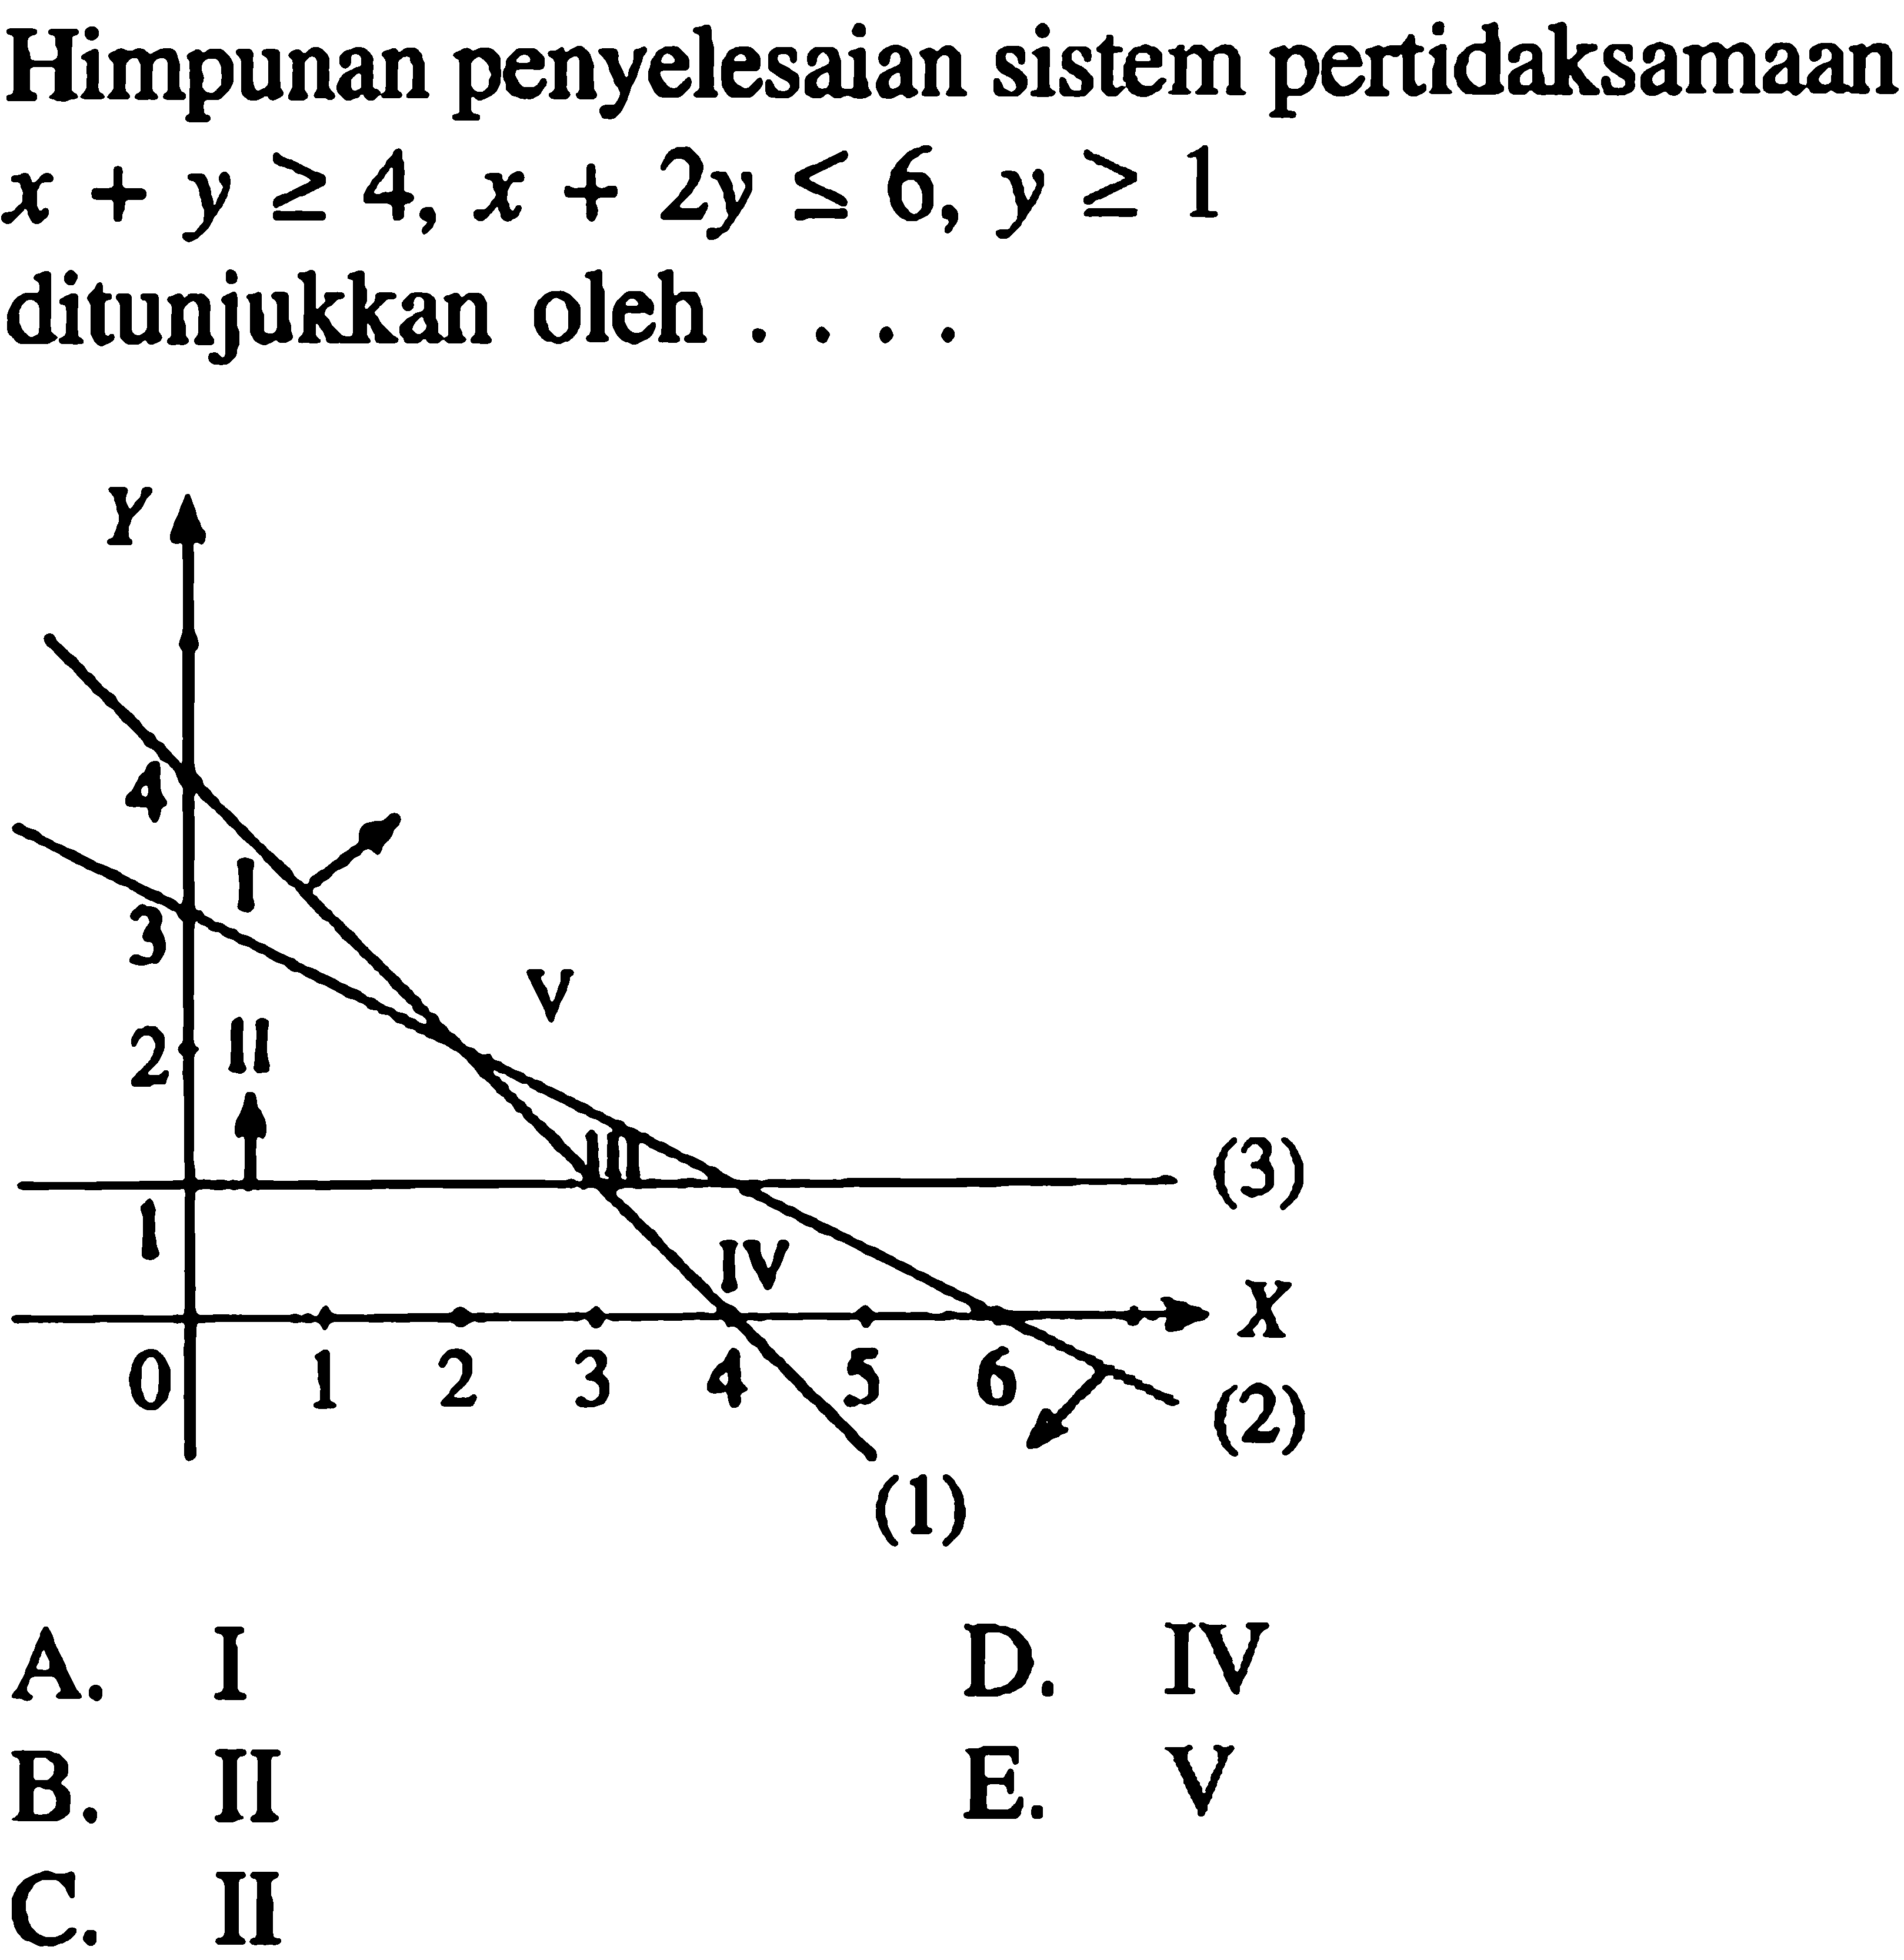 Himpunan penyelesaian sistem pertidaksamaan x +y>=24,x + 2y <=6,y>=1 ditunjukkan oleh..